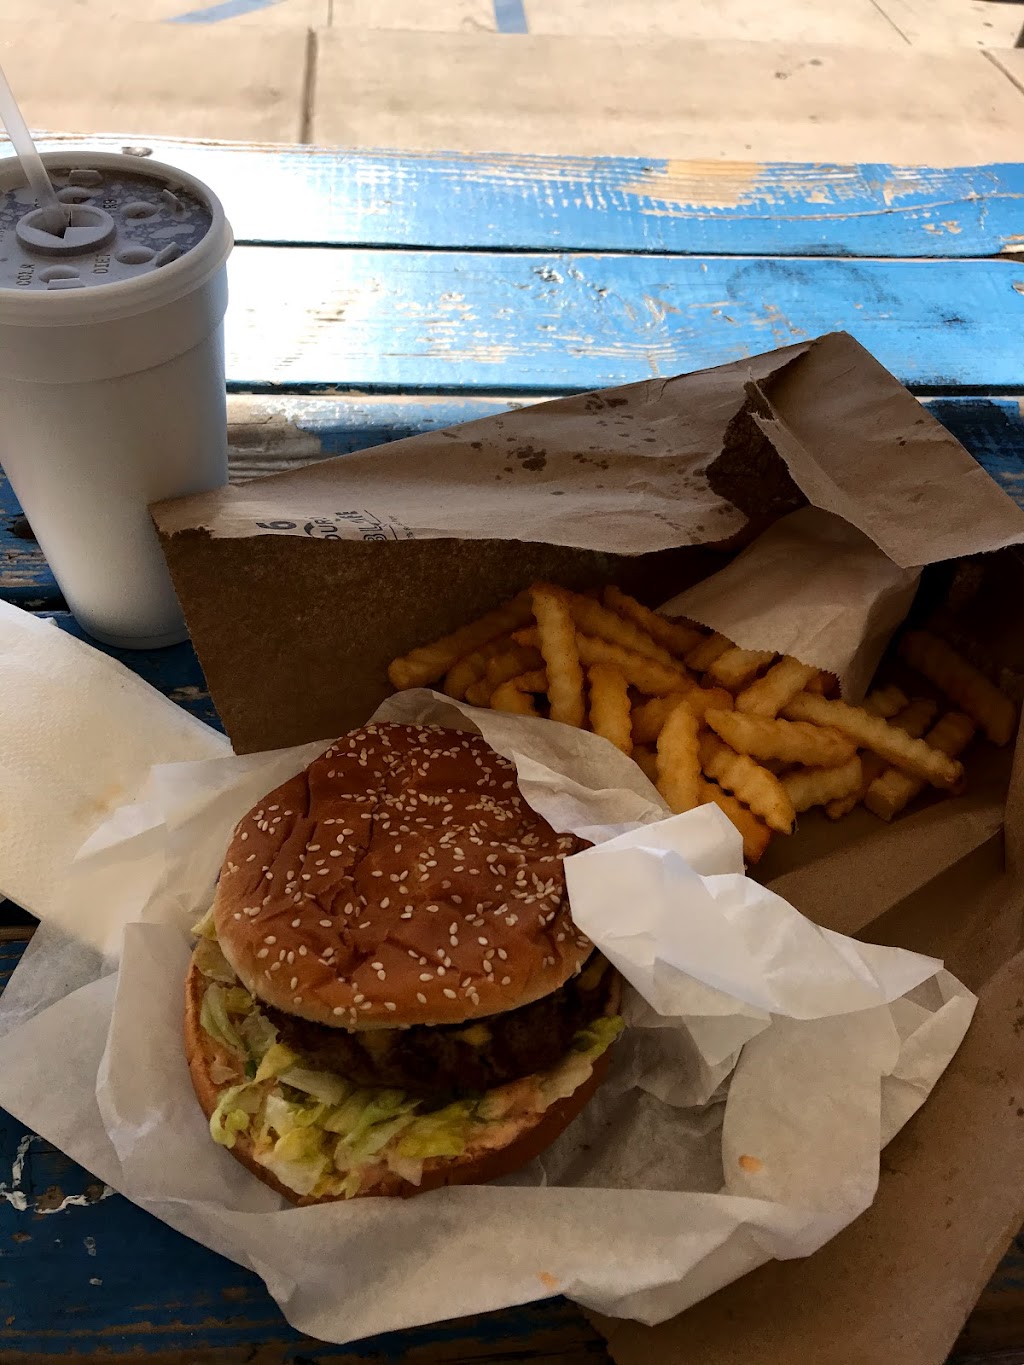 Super Burger | 1201 Morning Dr, Bakersfield, CA 93306, USA | Phone: (661) 366-6533